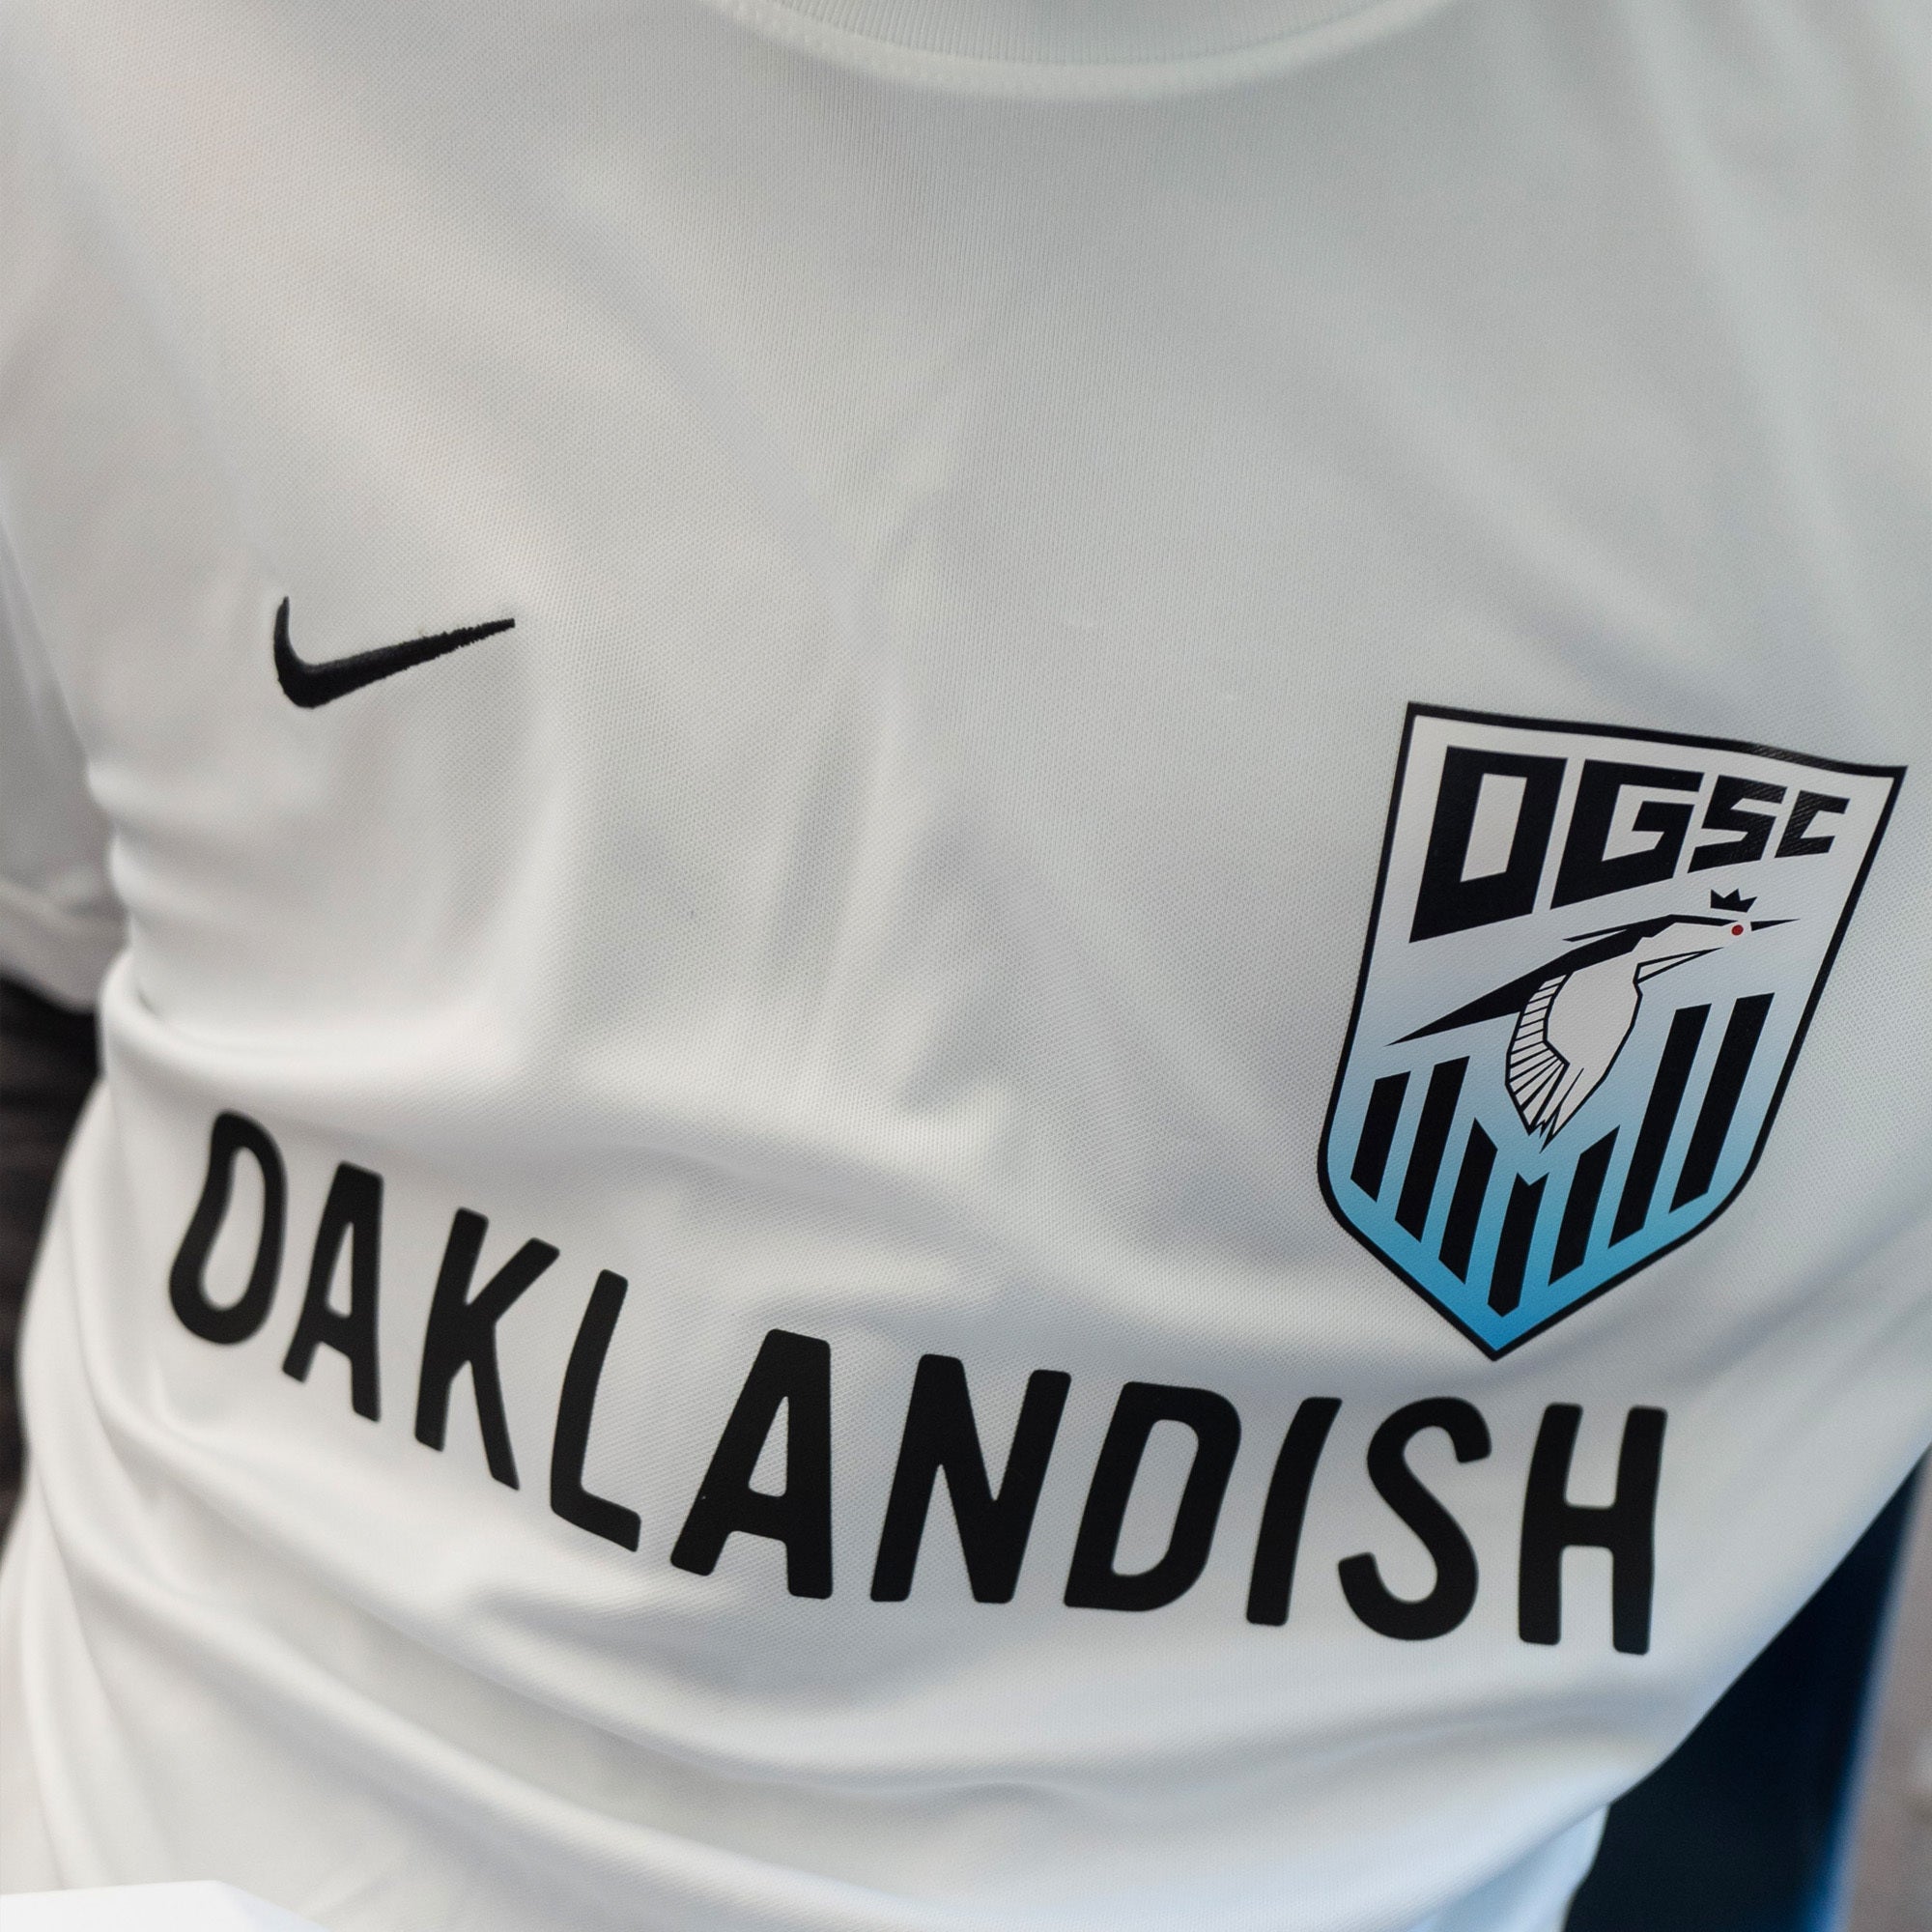 Close-up of Oaklandish wordmark, Oakland Genesis heron logo, and Nike logo on a white soccer jersey. 